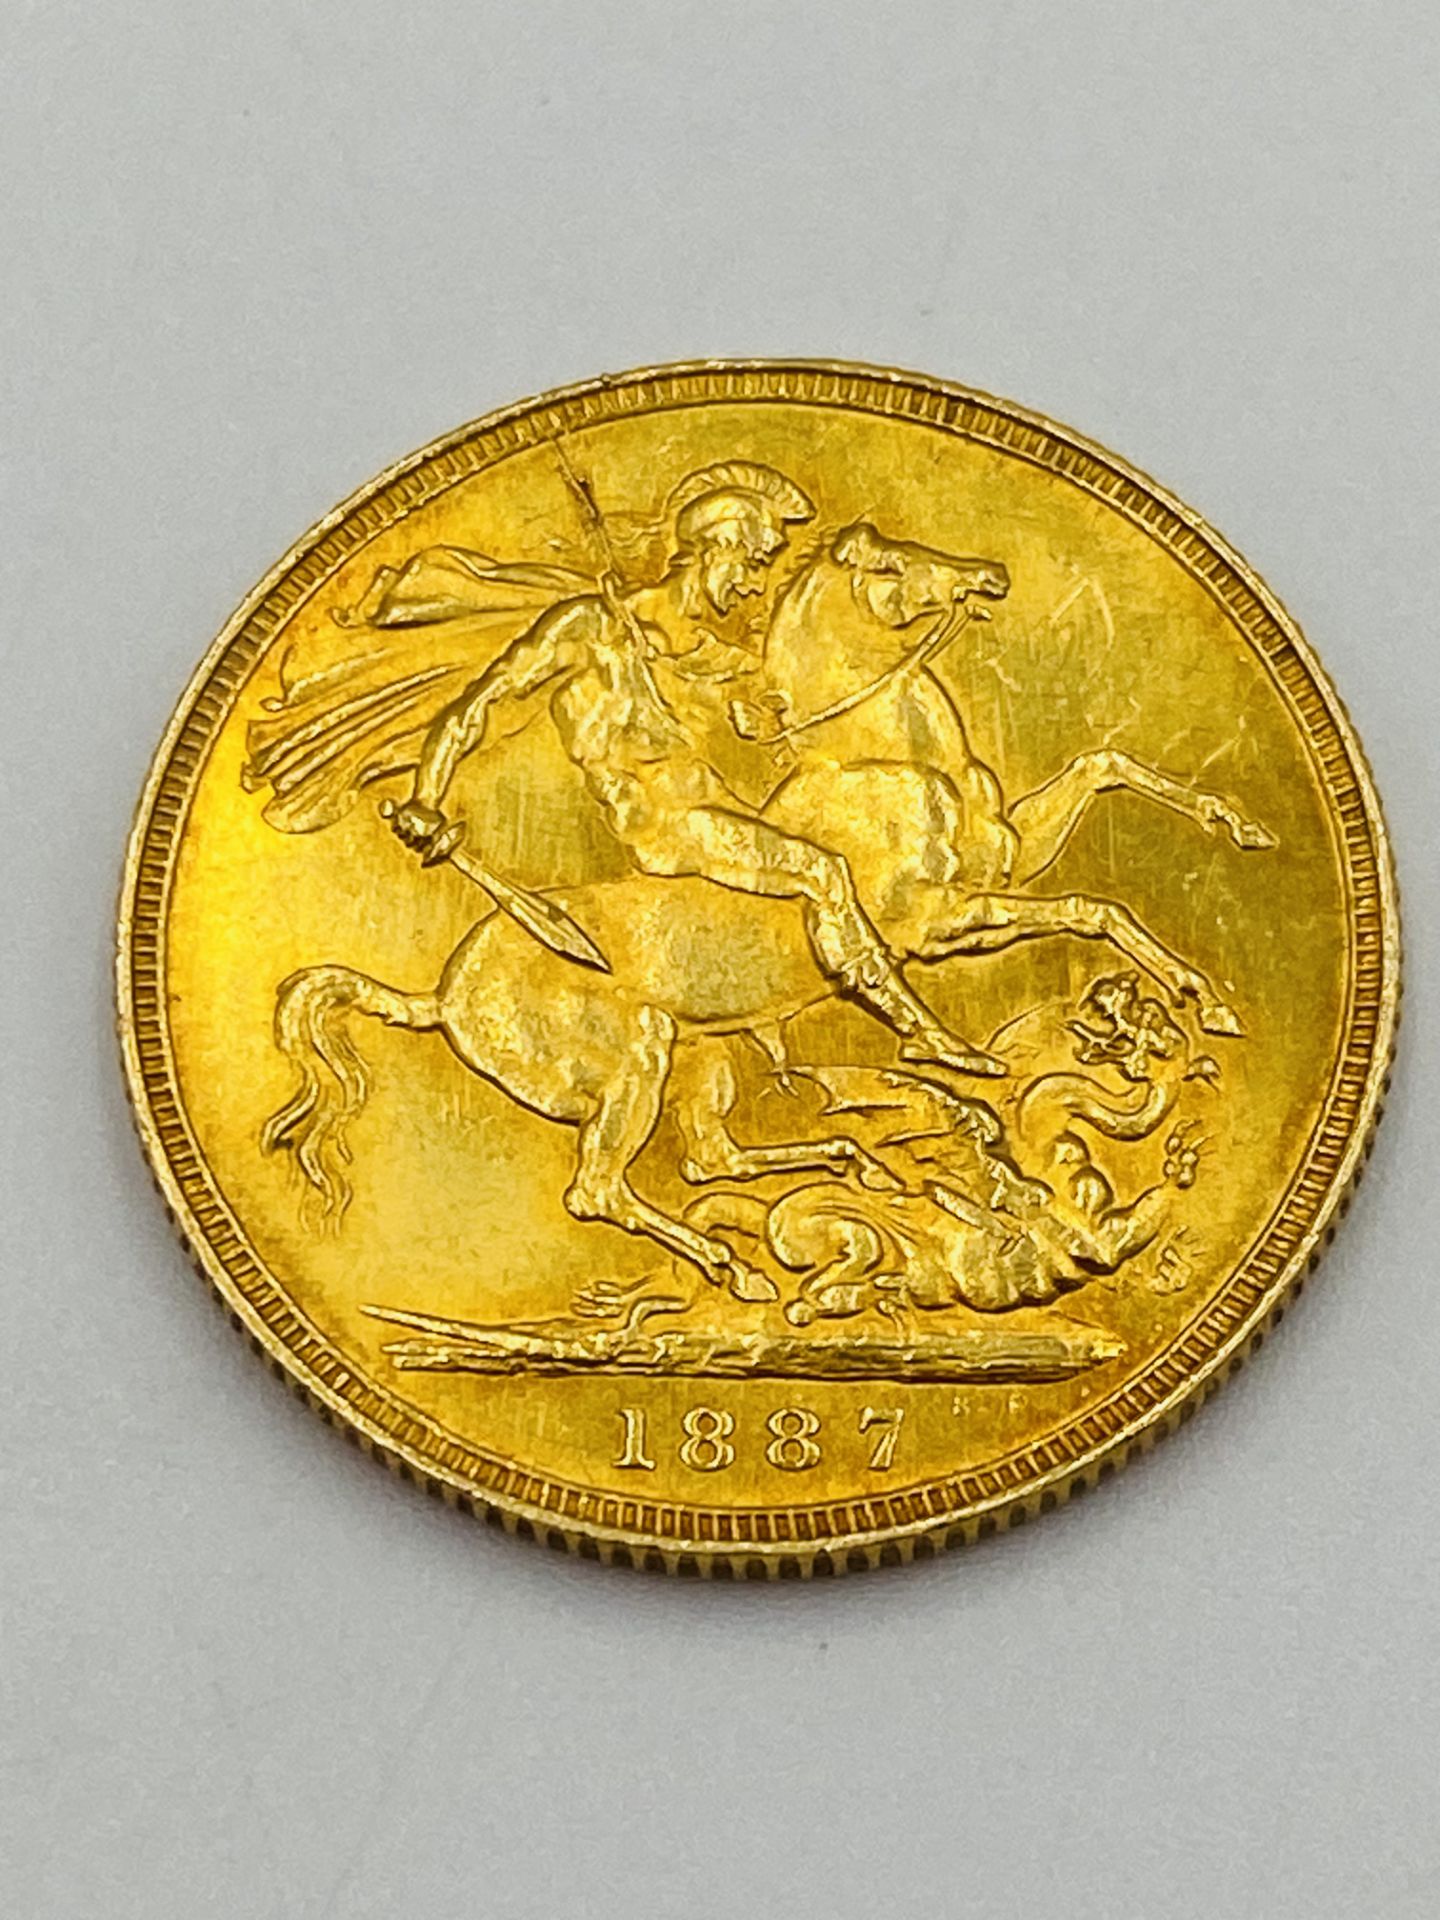 Victorian gold sovereign